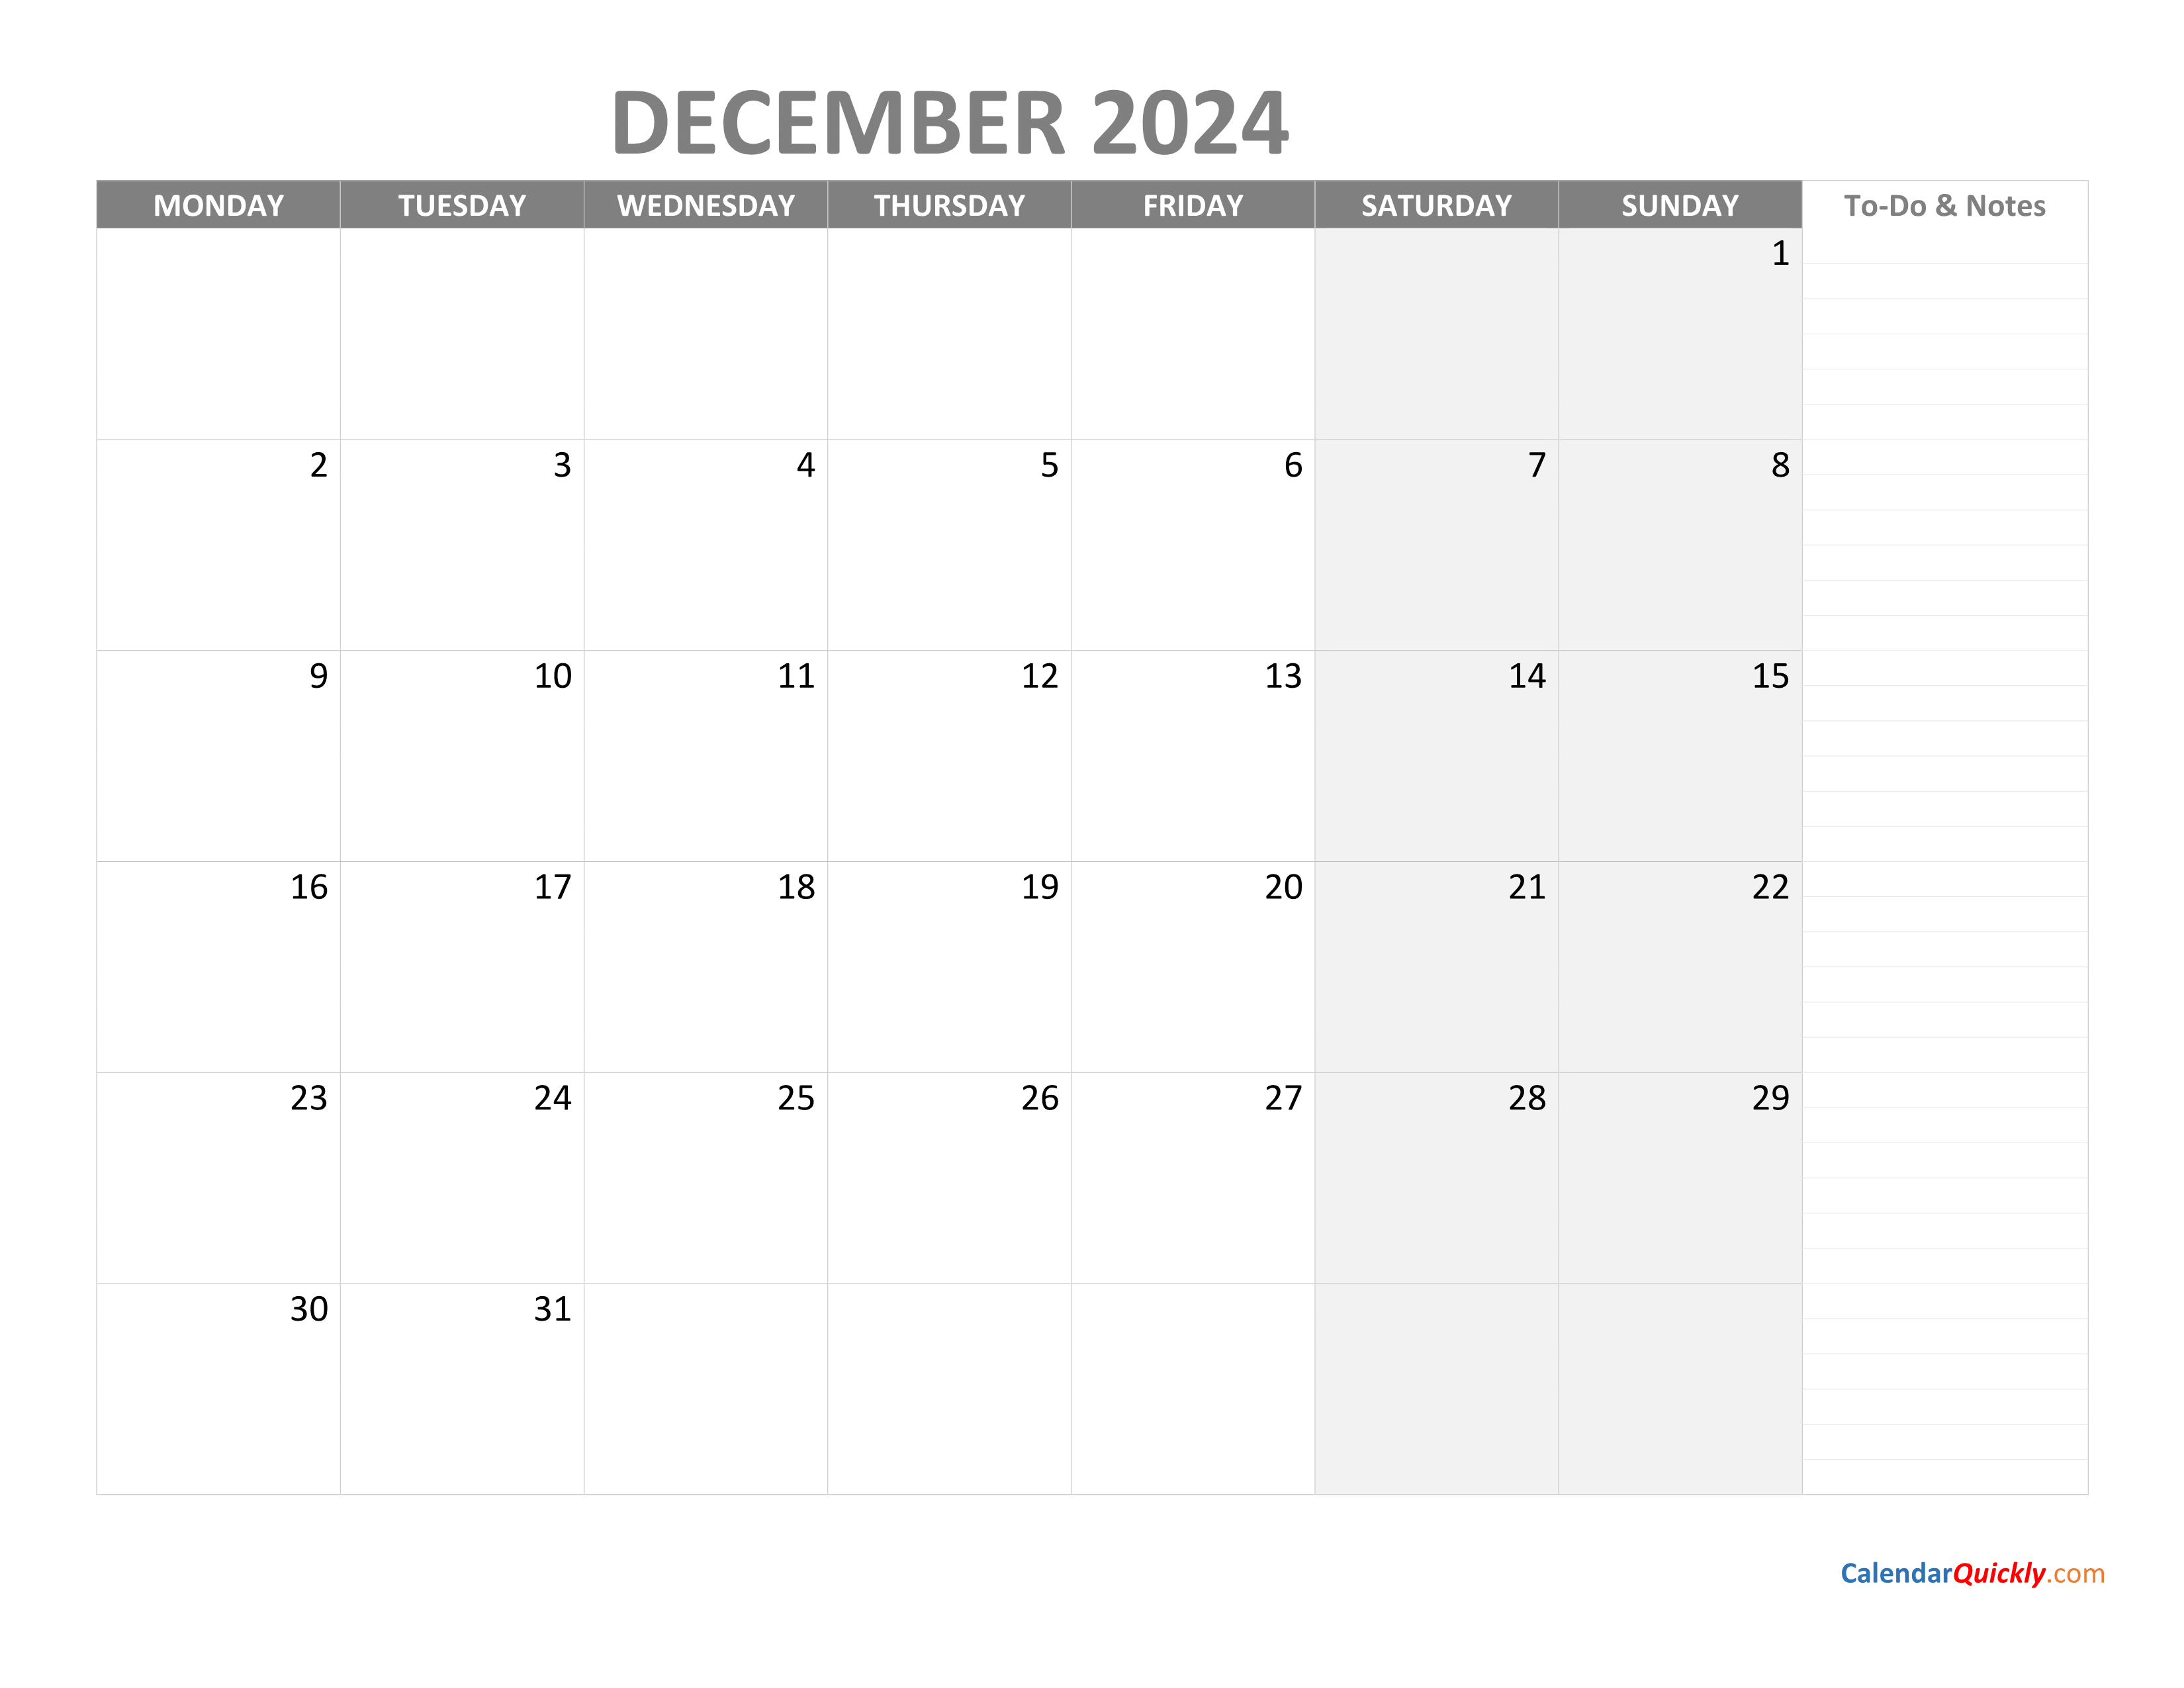 Календарь на май месяц 2024 года. January 2024. January 2024 Calendar. Планер на 2023 год. Календарь январь 2024 с заметками.